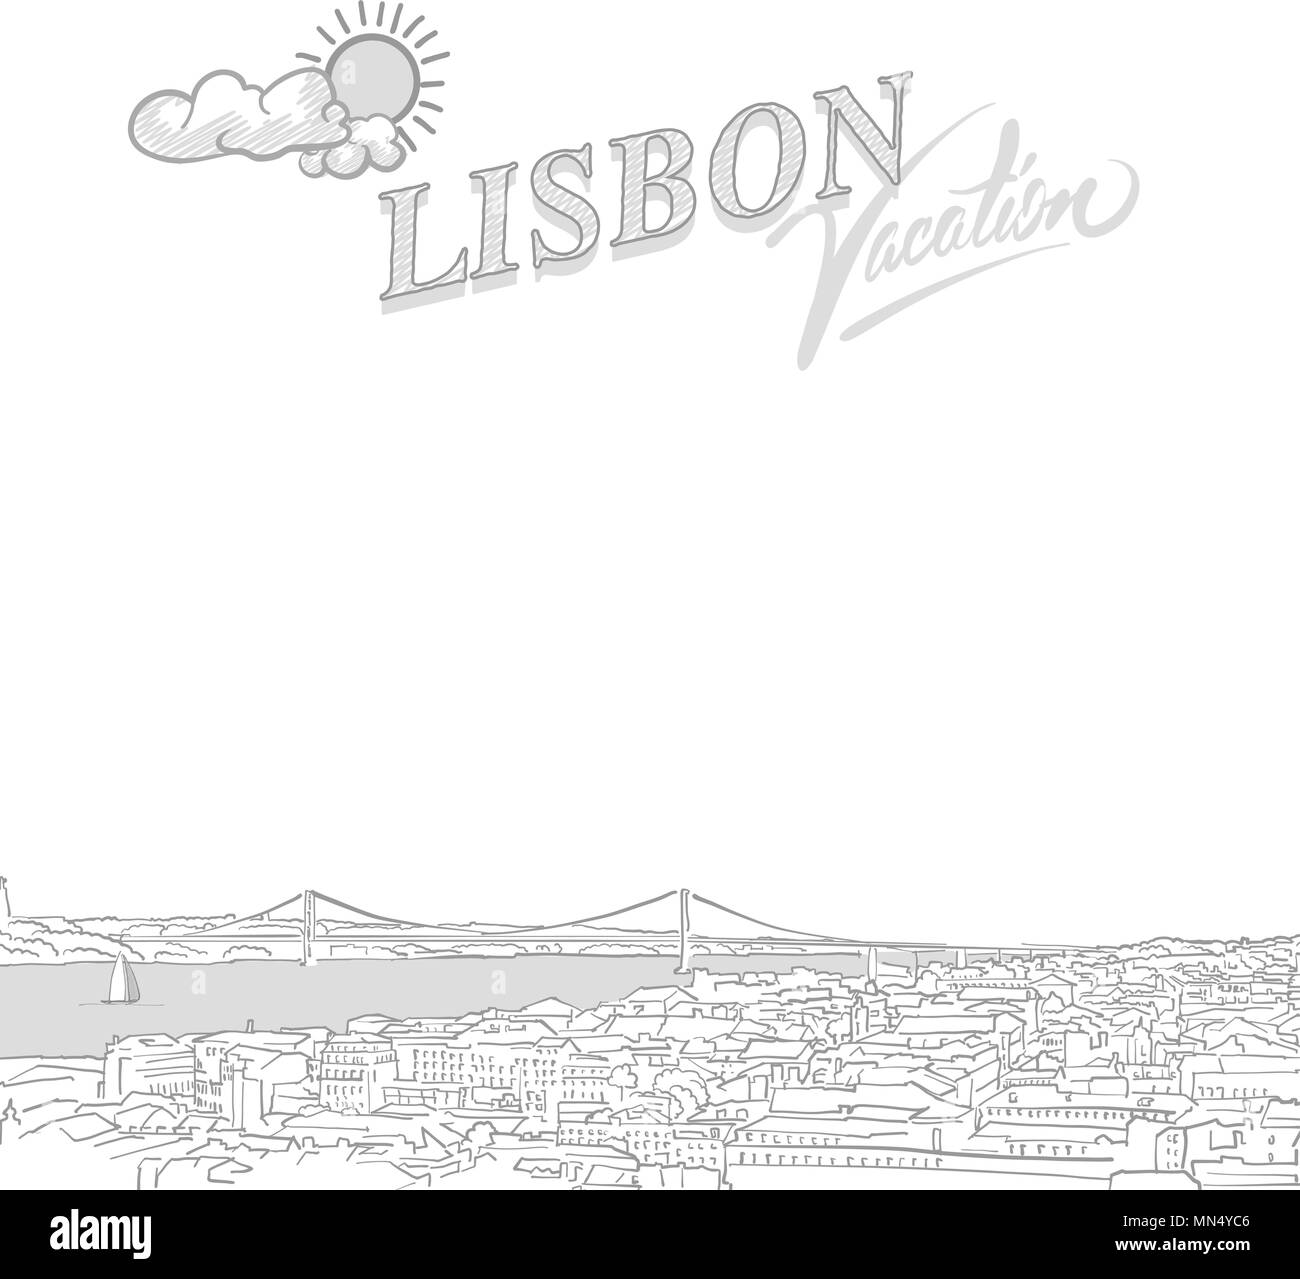 Lisbon travel marketing cover, hand drawn vector sketch Stock Vector